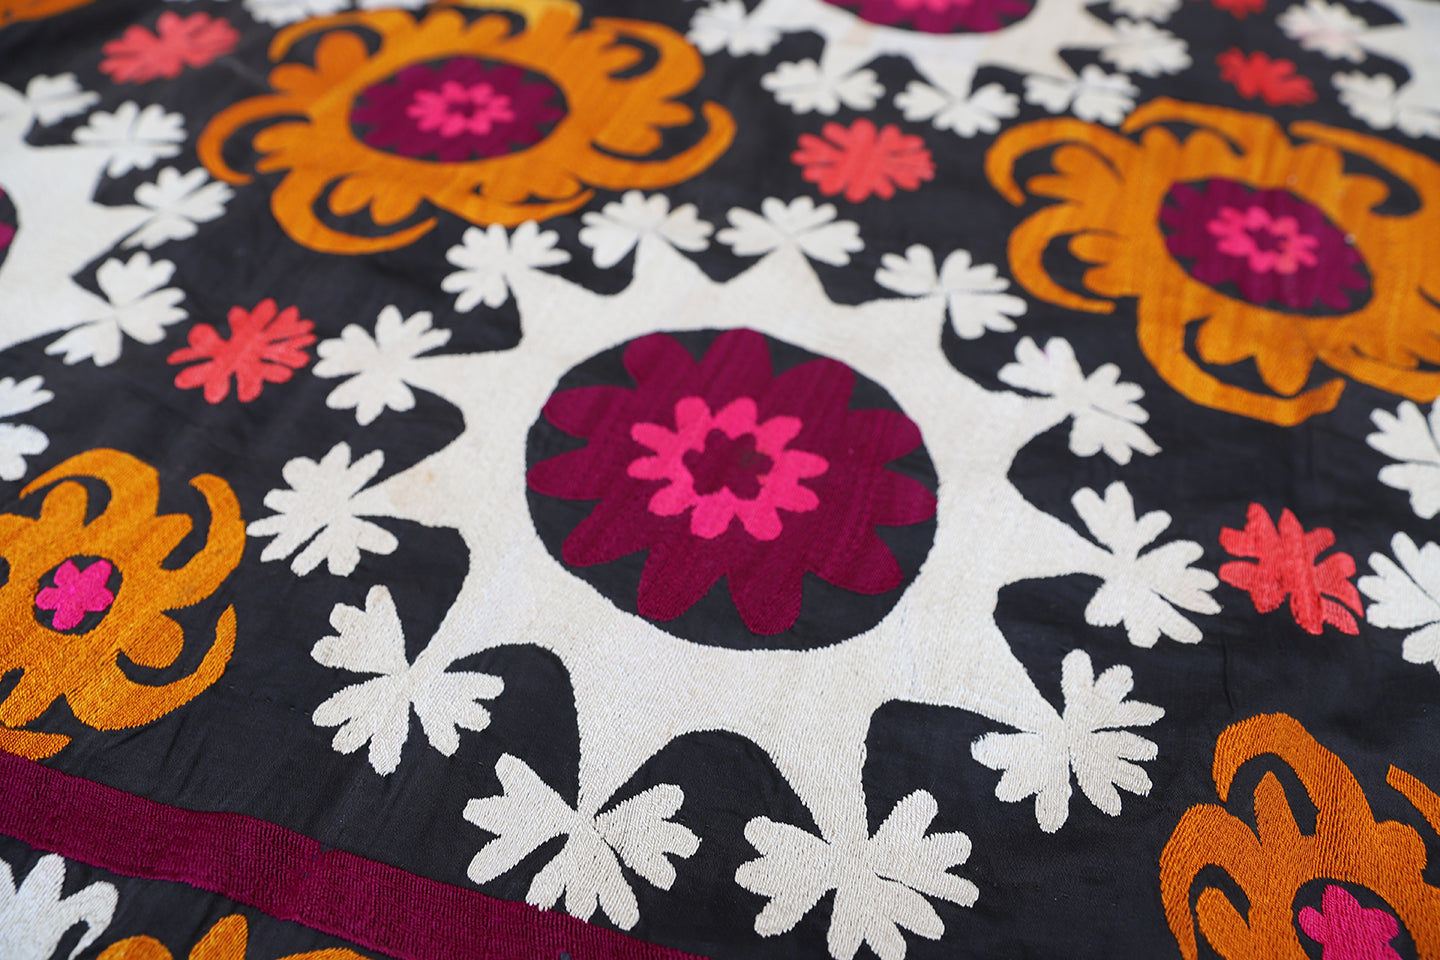 6'x9' Colorful Vintage Uzbek Tapestry Textile